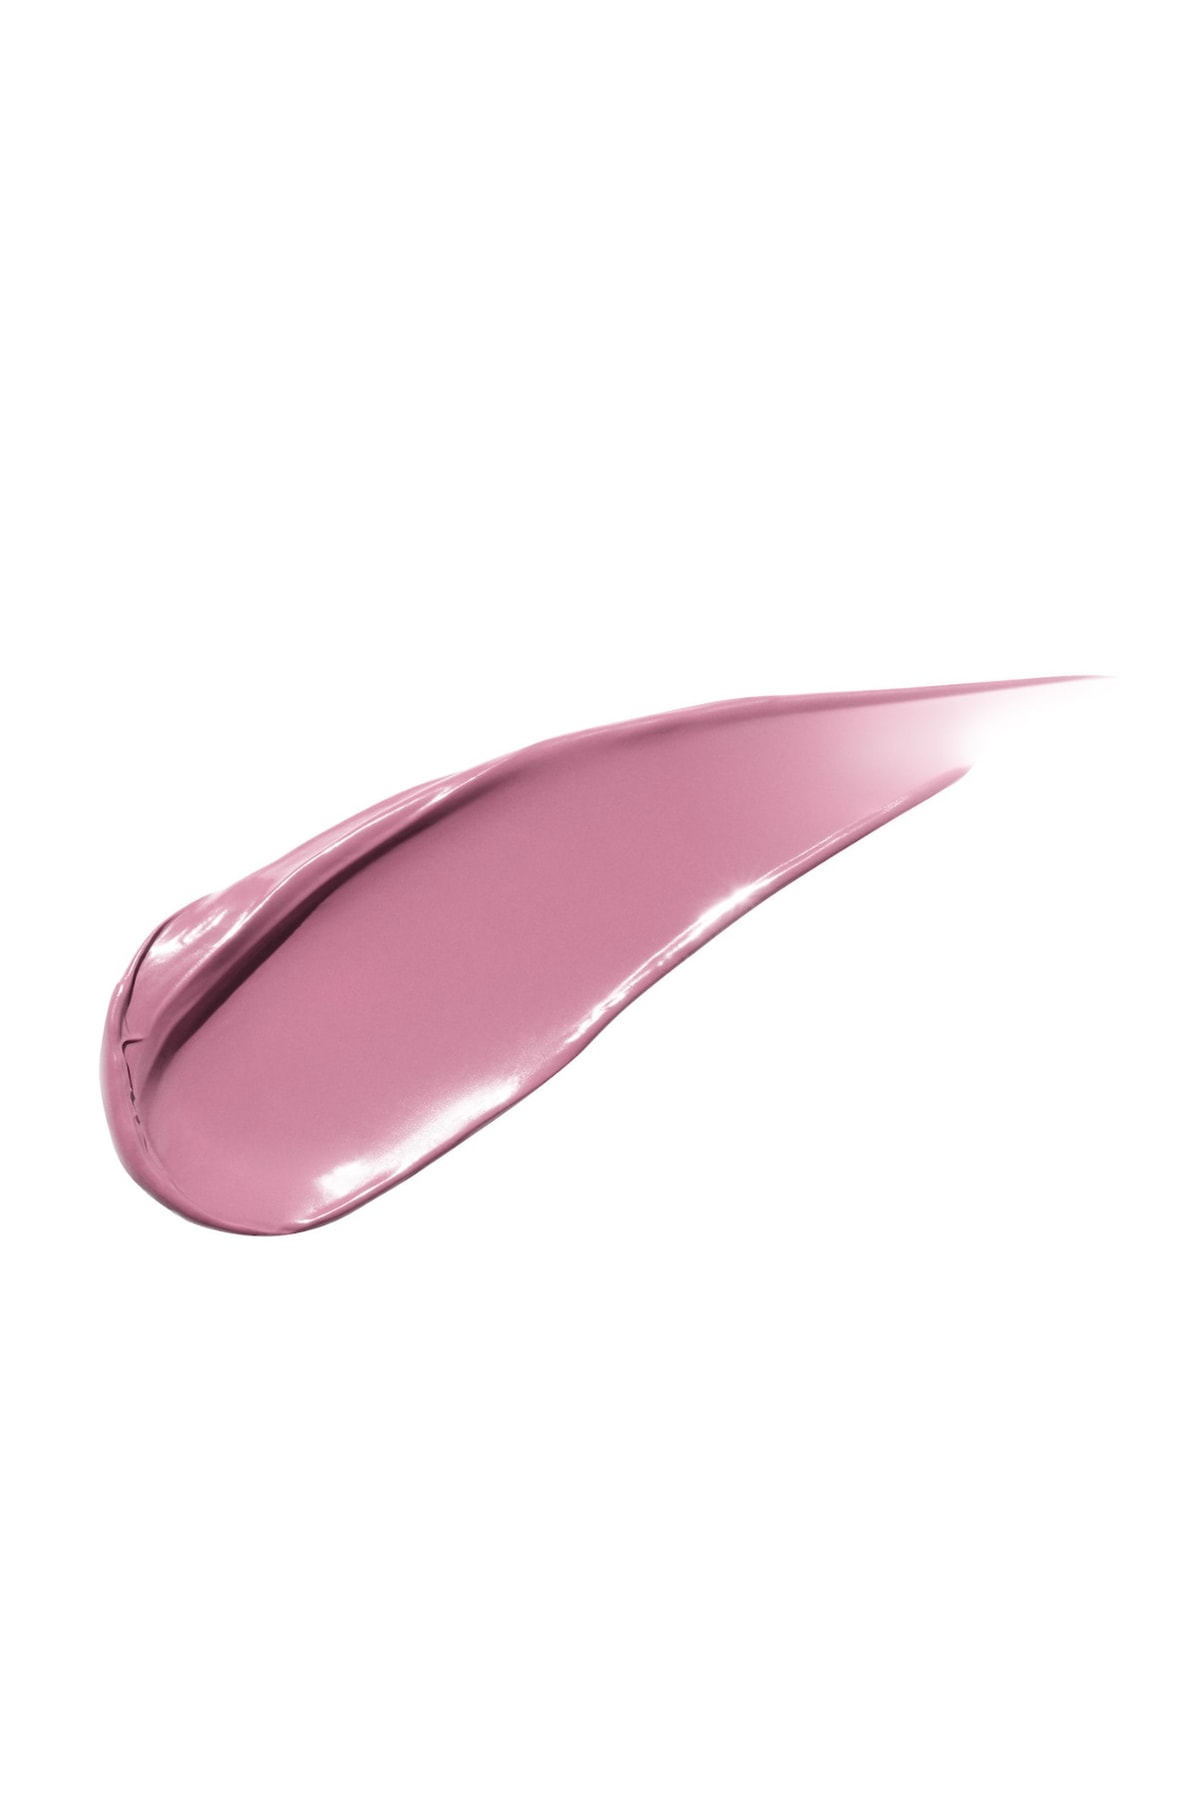 FENTY BEAUTY Gloss Bomb Cream Color Drip Lip Cream ZO7853